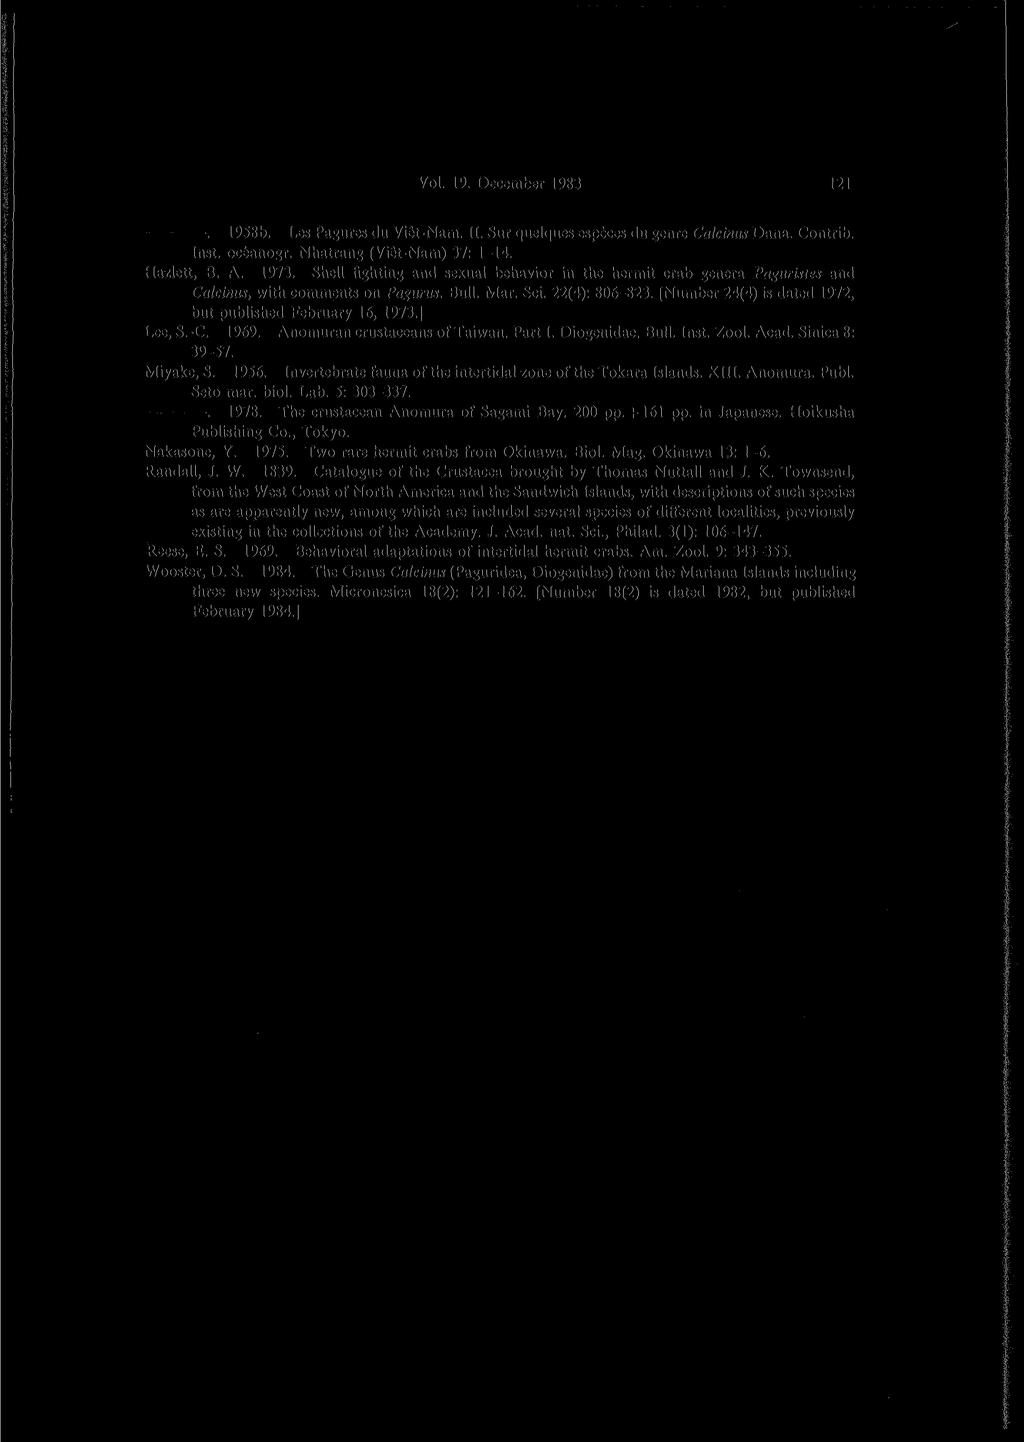 Vol. 19. December 1983 121. 1958b. Les Pagures du Viet-Nam. II. Sur quelques especes du genre Calcinus Dana. Contrib. Inst, oceanogr. Nhatrang (Viet-Nam) 37: 1-14. Hazlett, B. A. 1973.